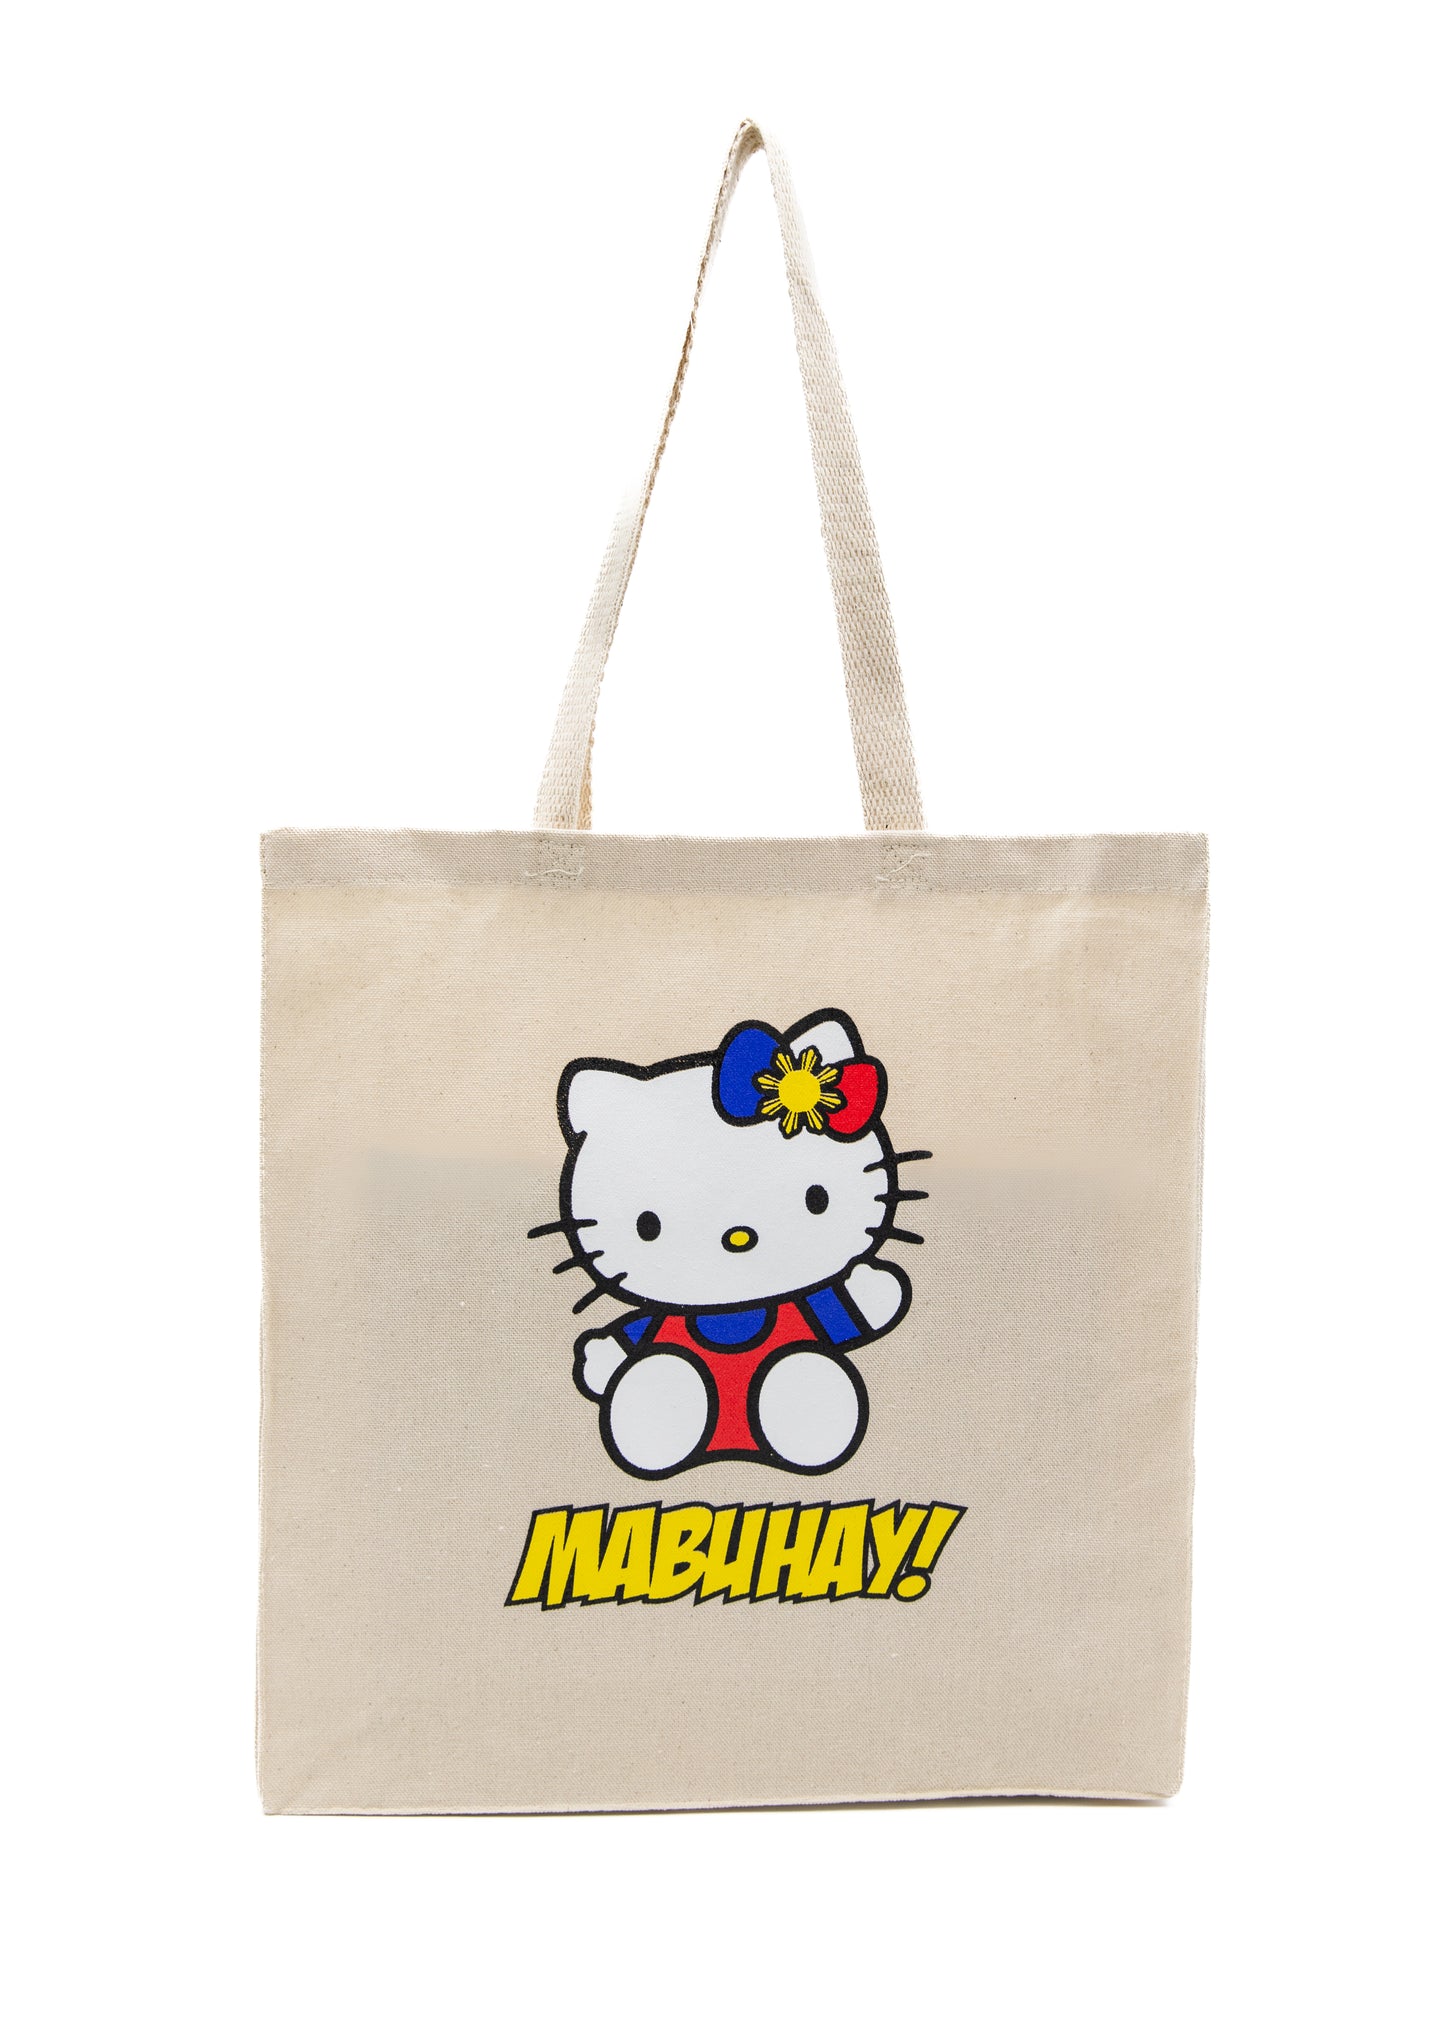 Mabuhay Hello Kitty Tote Bag